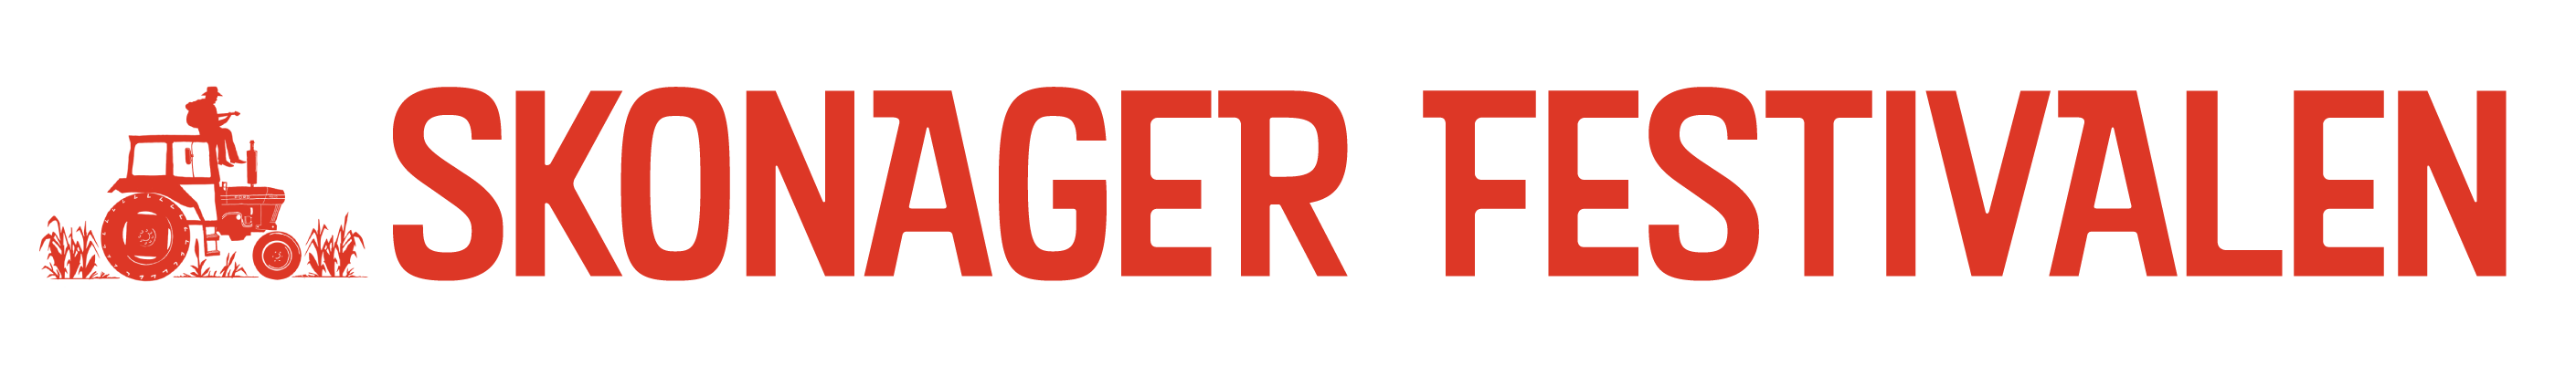 Skonager festival logo